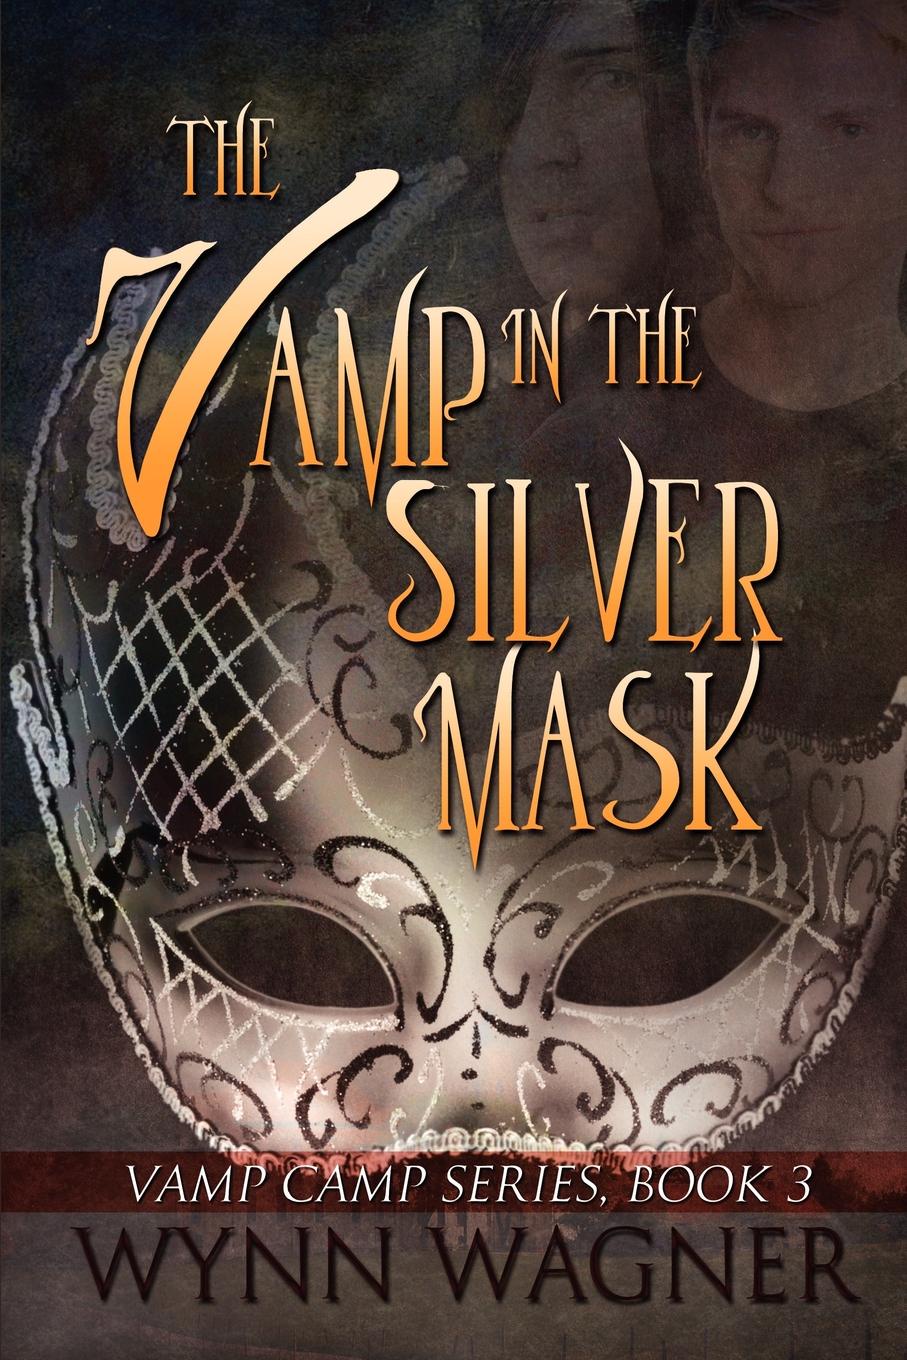 Серебряная маска книга. Empire of the Vampire книга. Серебряная маска книга обложка. Книга про маски